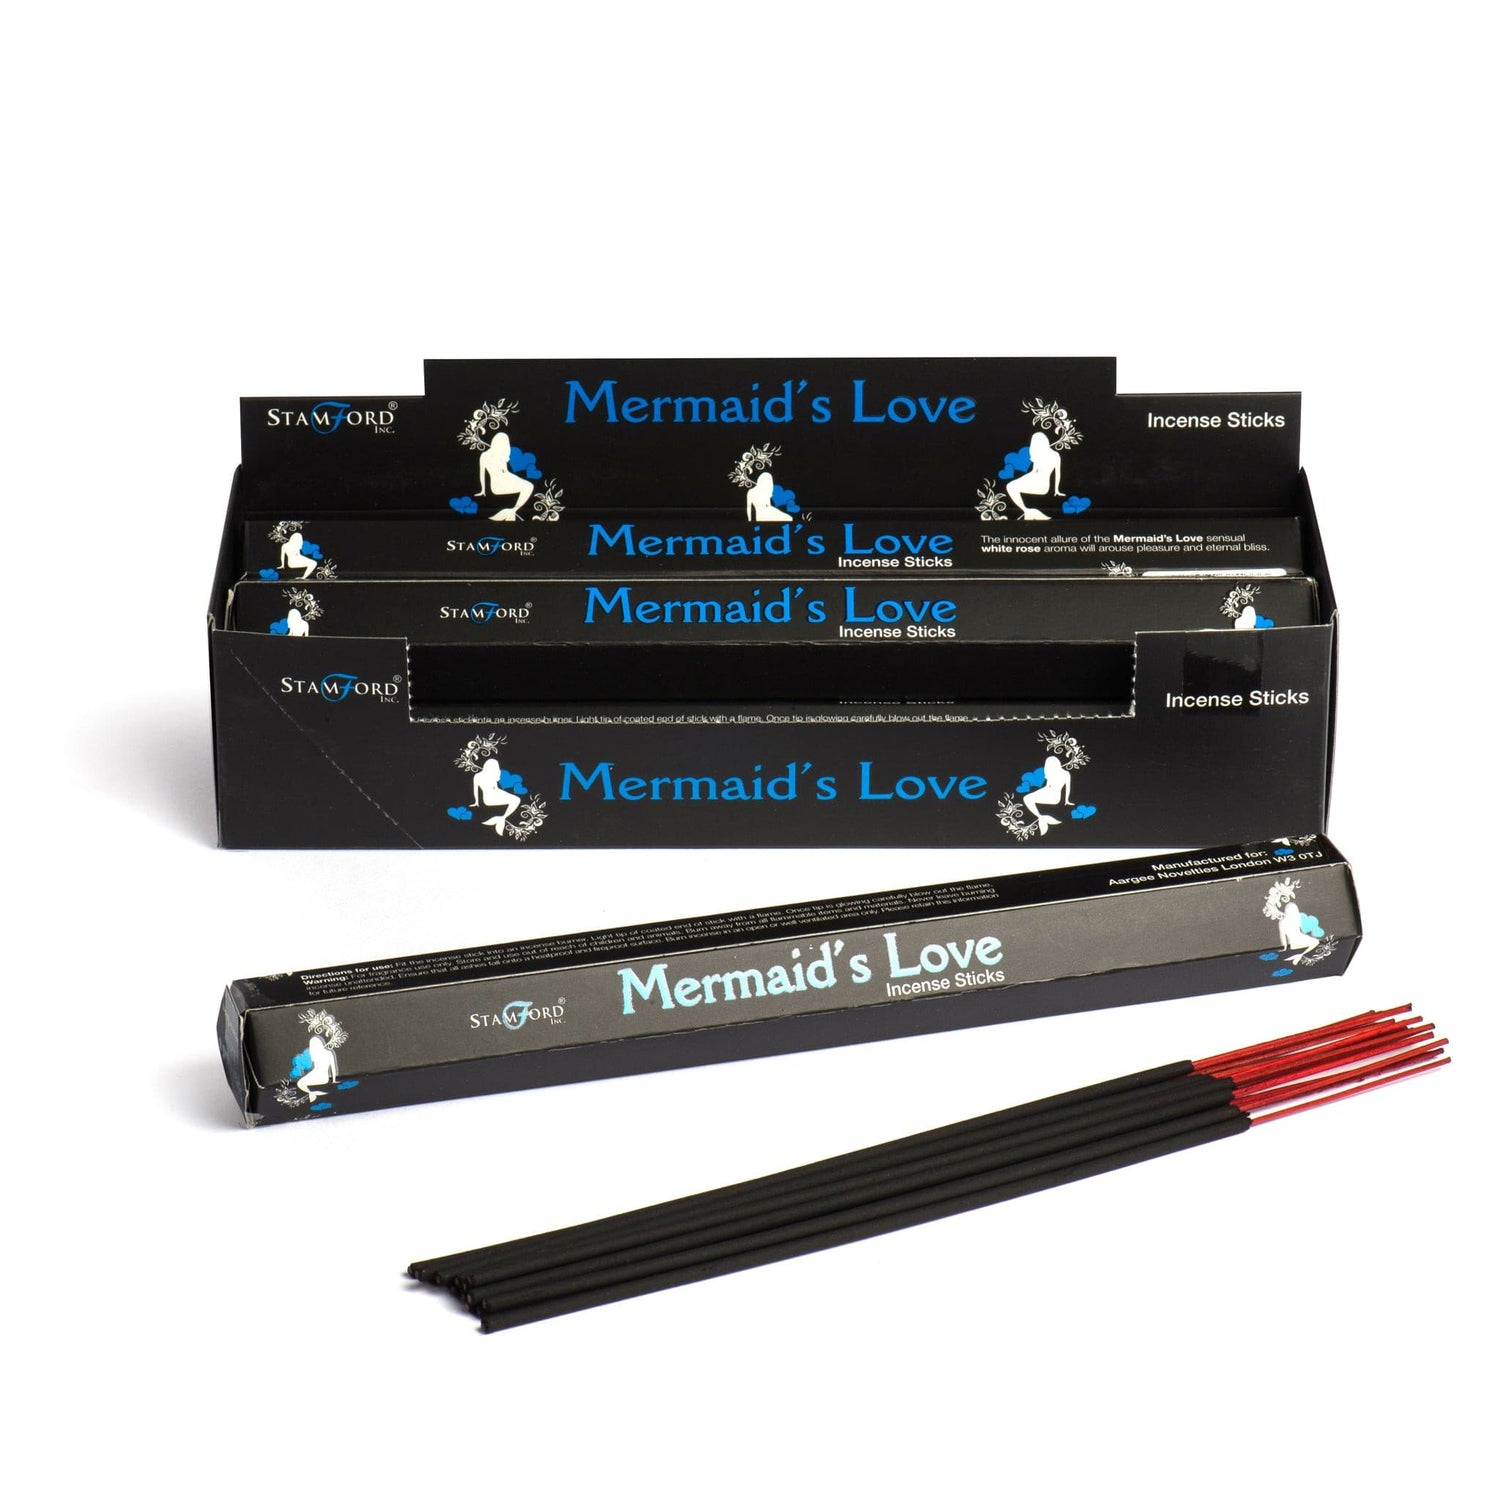 Stamford Mermaid's Love Incense Sticks.